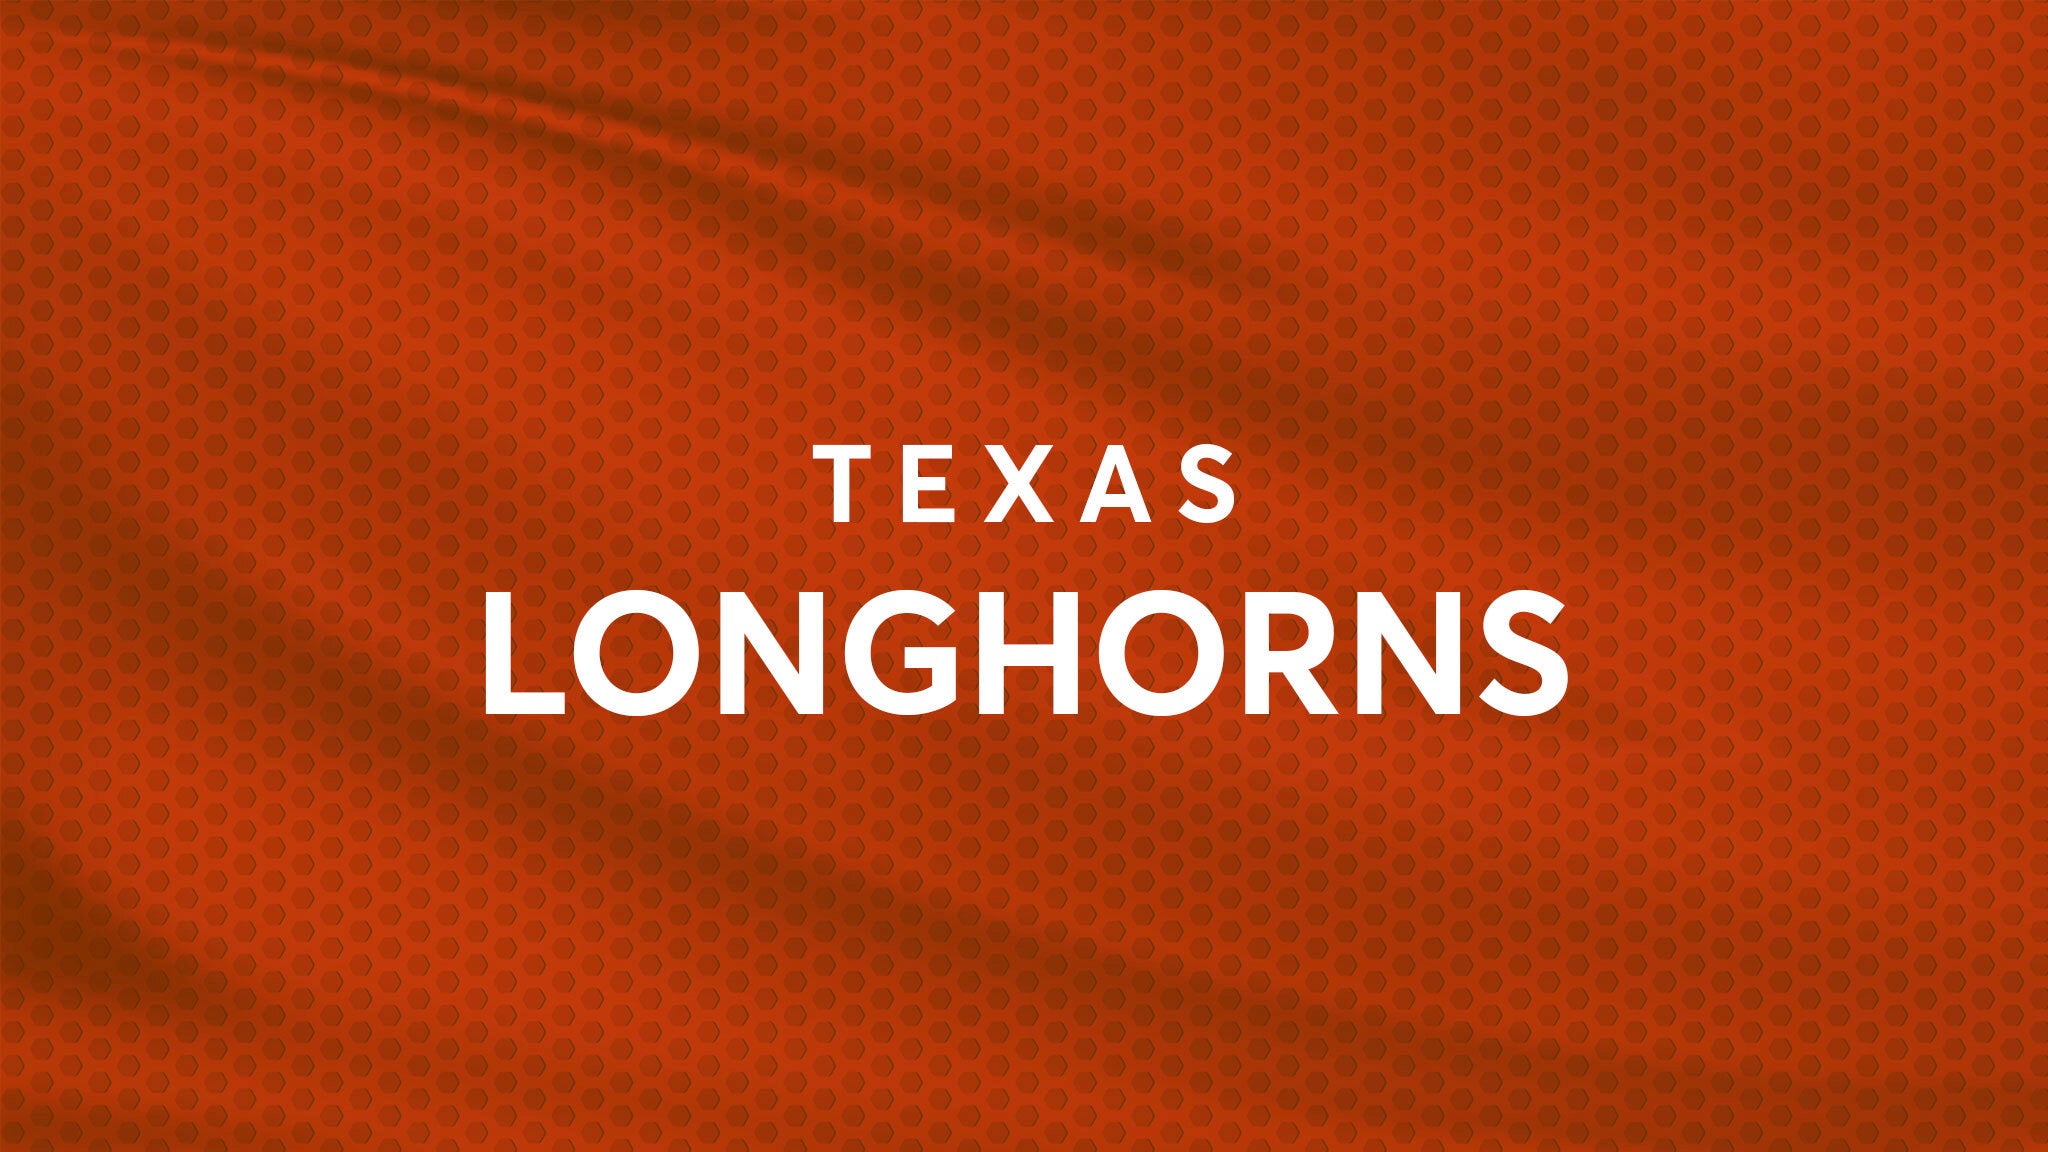 Texas Longhorns Baseball vs. BYU Cougars Baseball